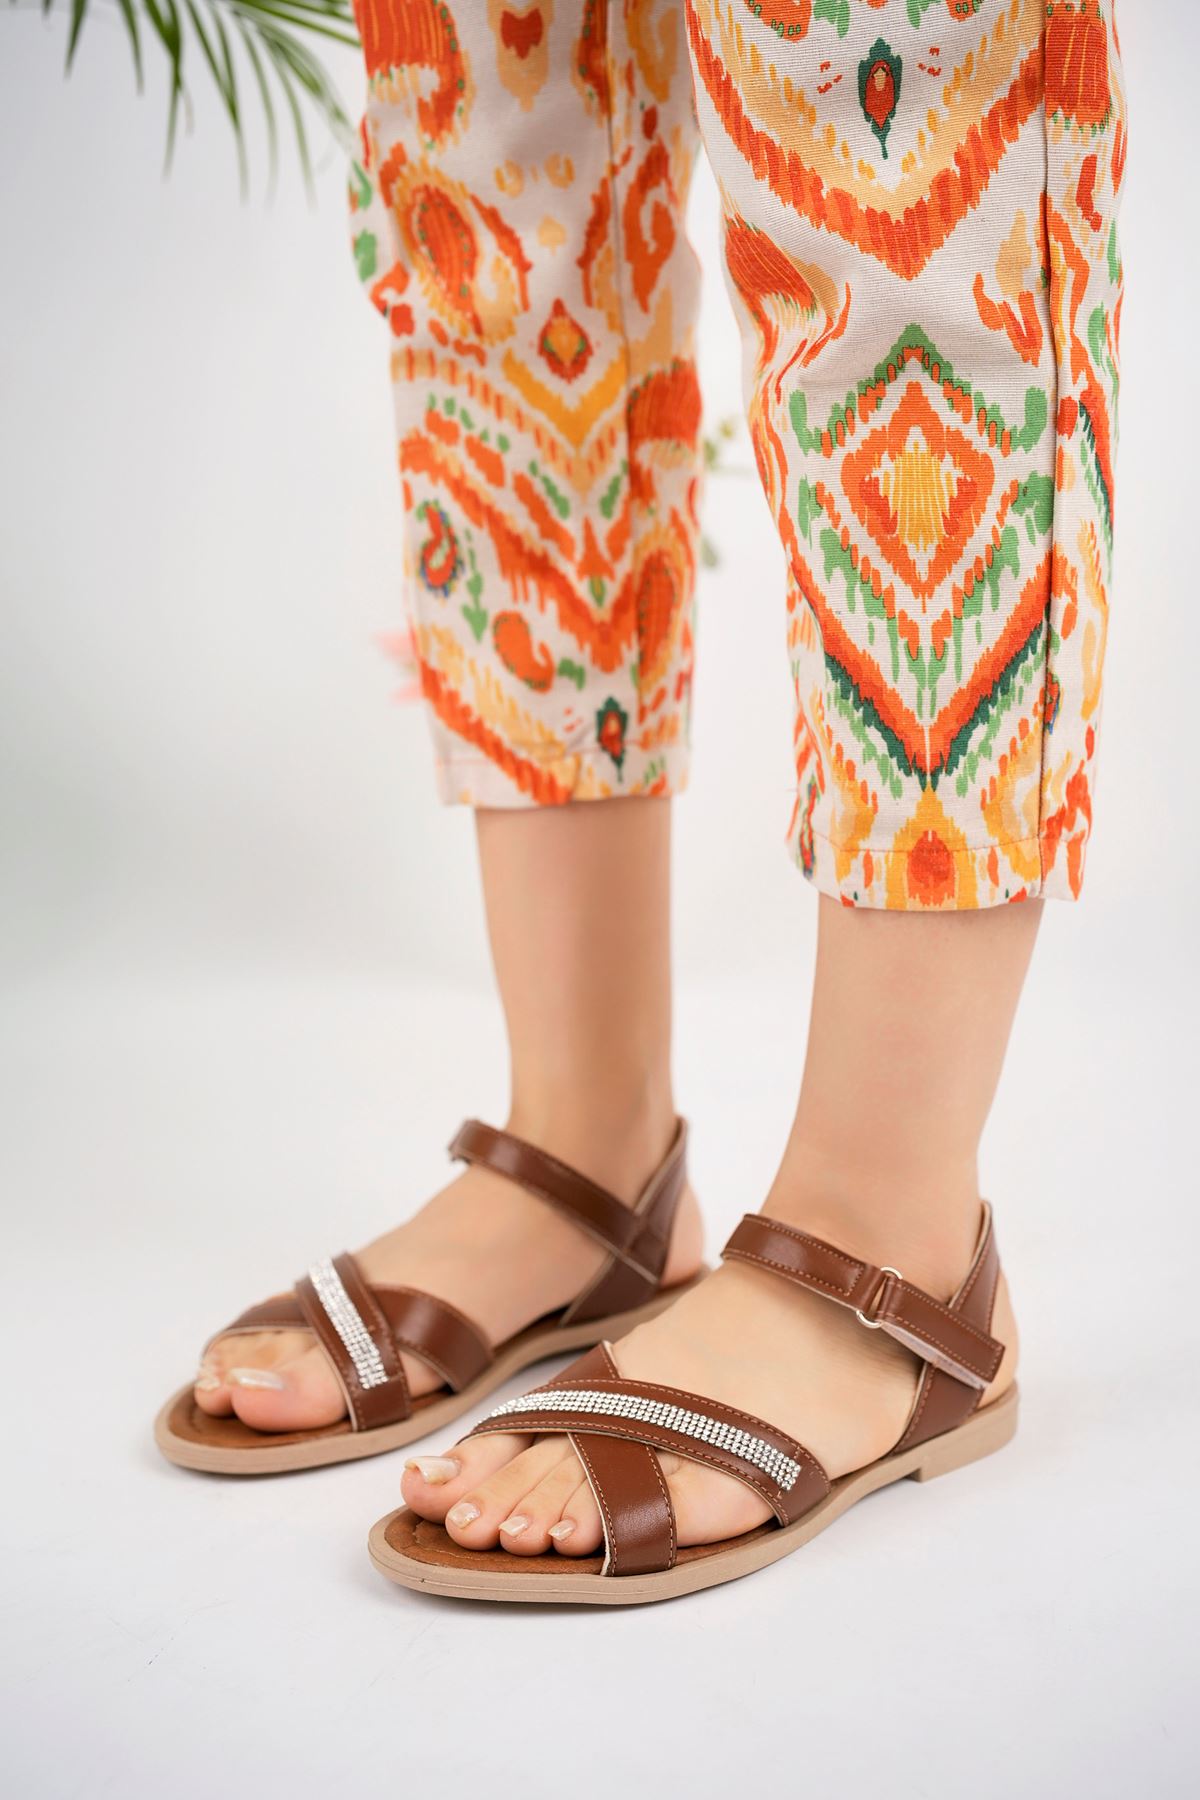 Tan Women's Sandals with Cross Strap Stones